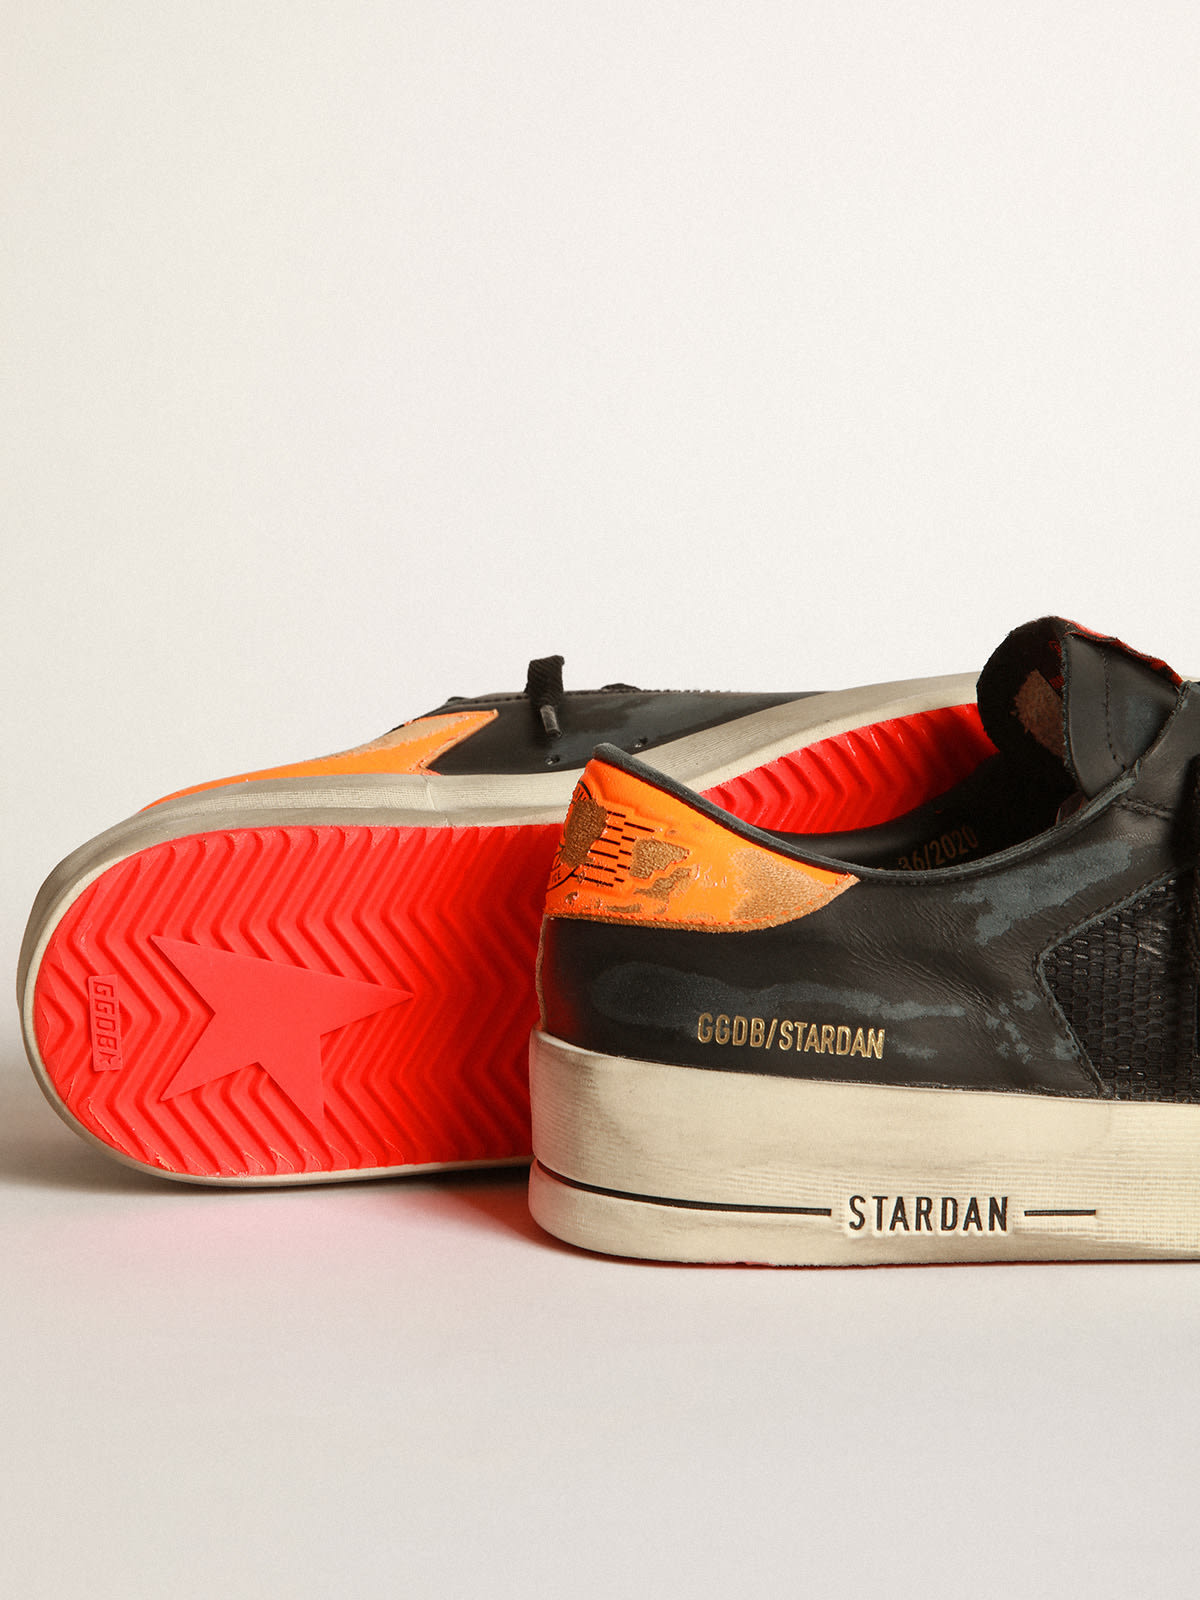 Golden Goose - Sneakers Stardan nere e arancioni in 